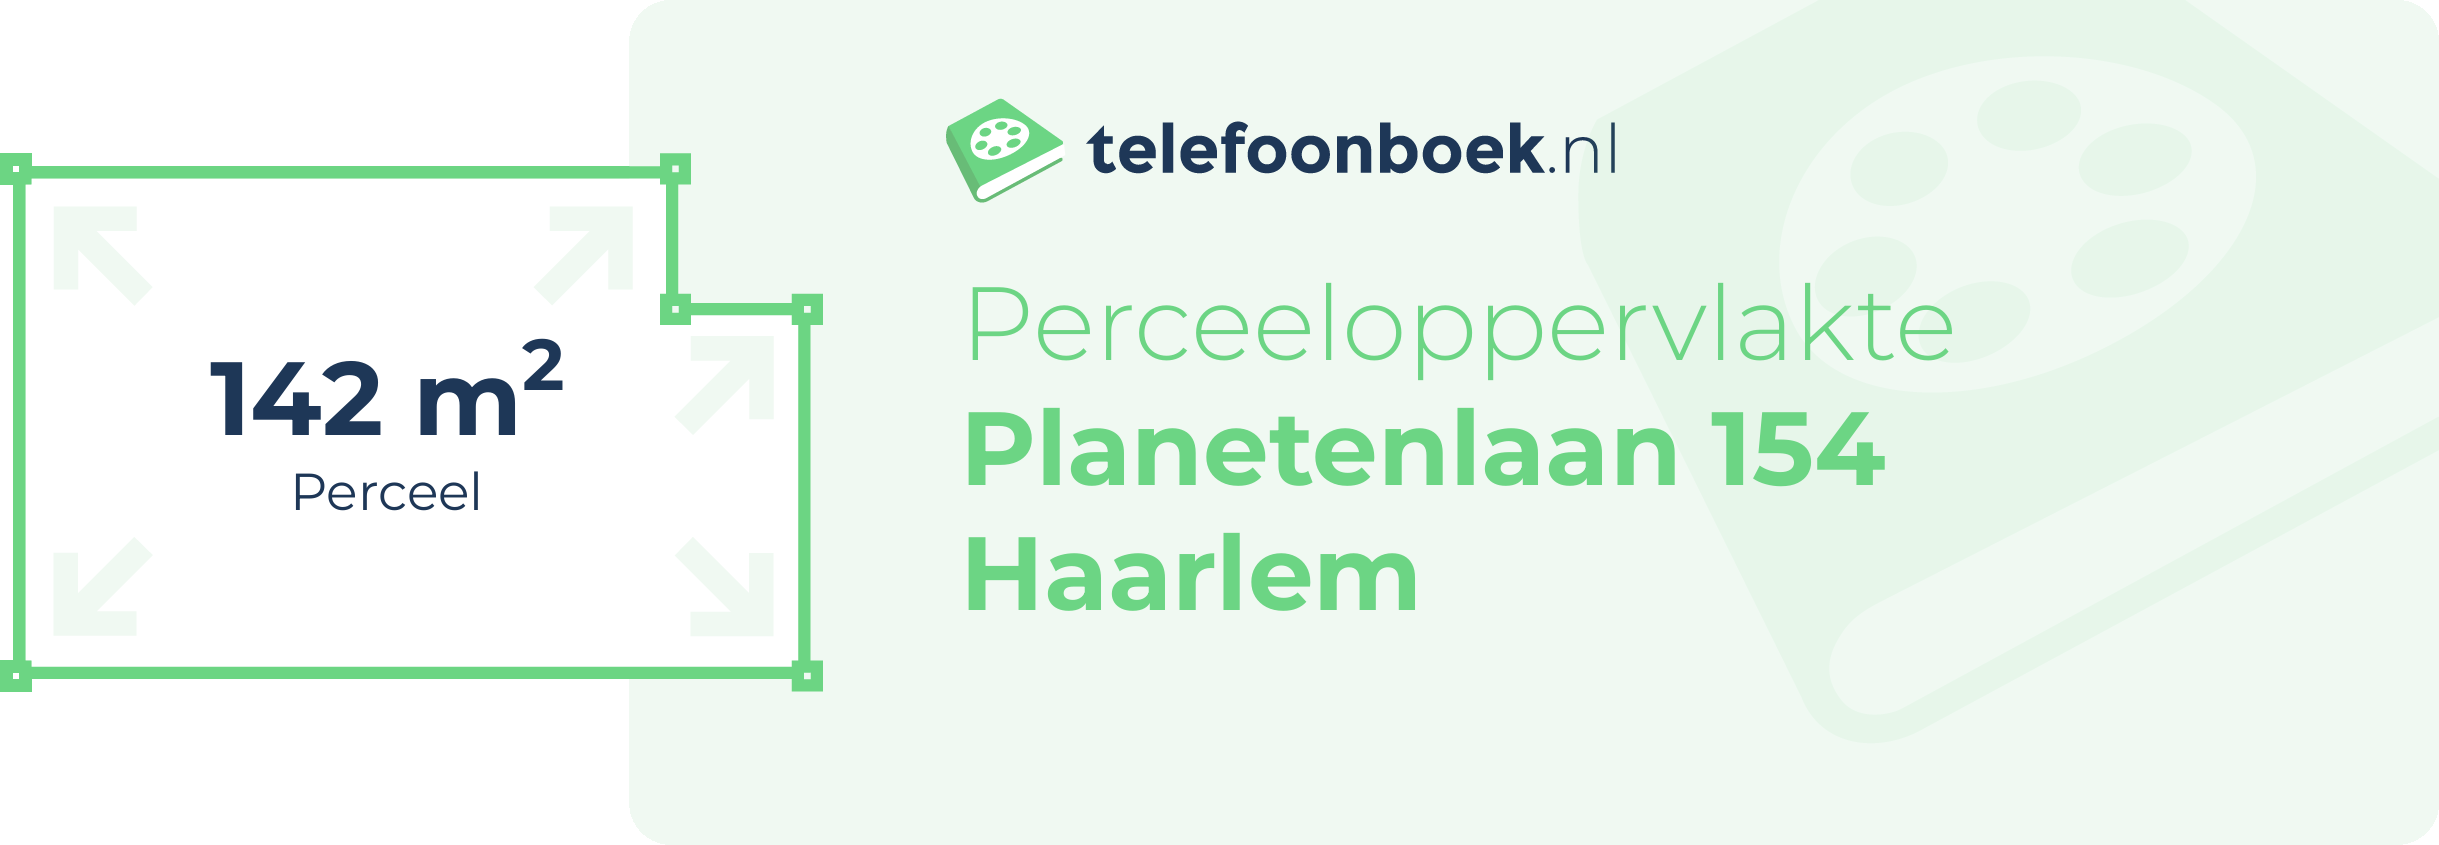 Perceeloppervlakte Planetenlaan 154 Haarlem